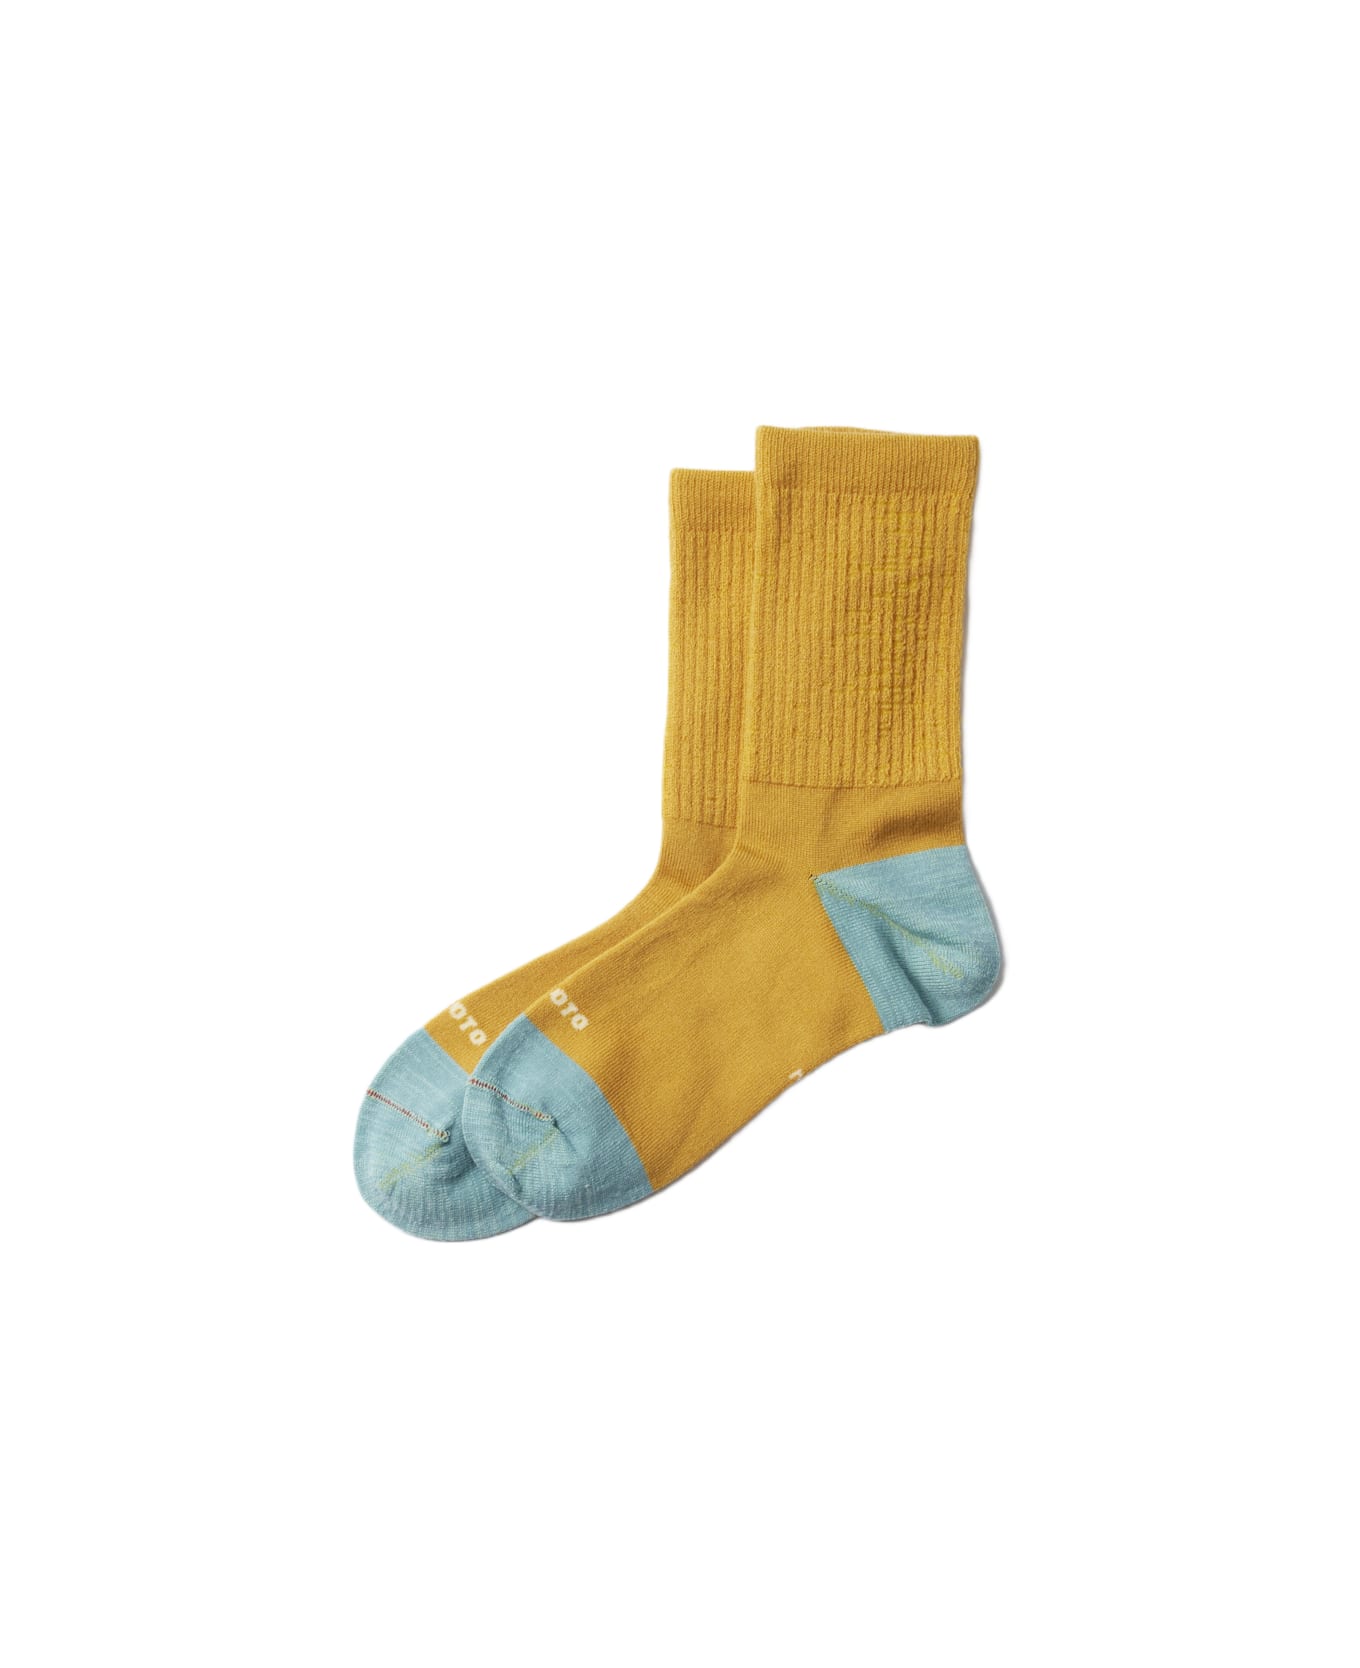 Rototo Hybrid Crew Socks Merino Wool - Yellow L.blue 靴下